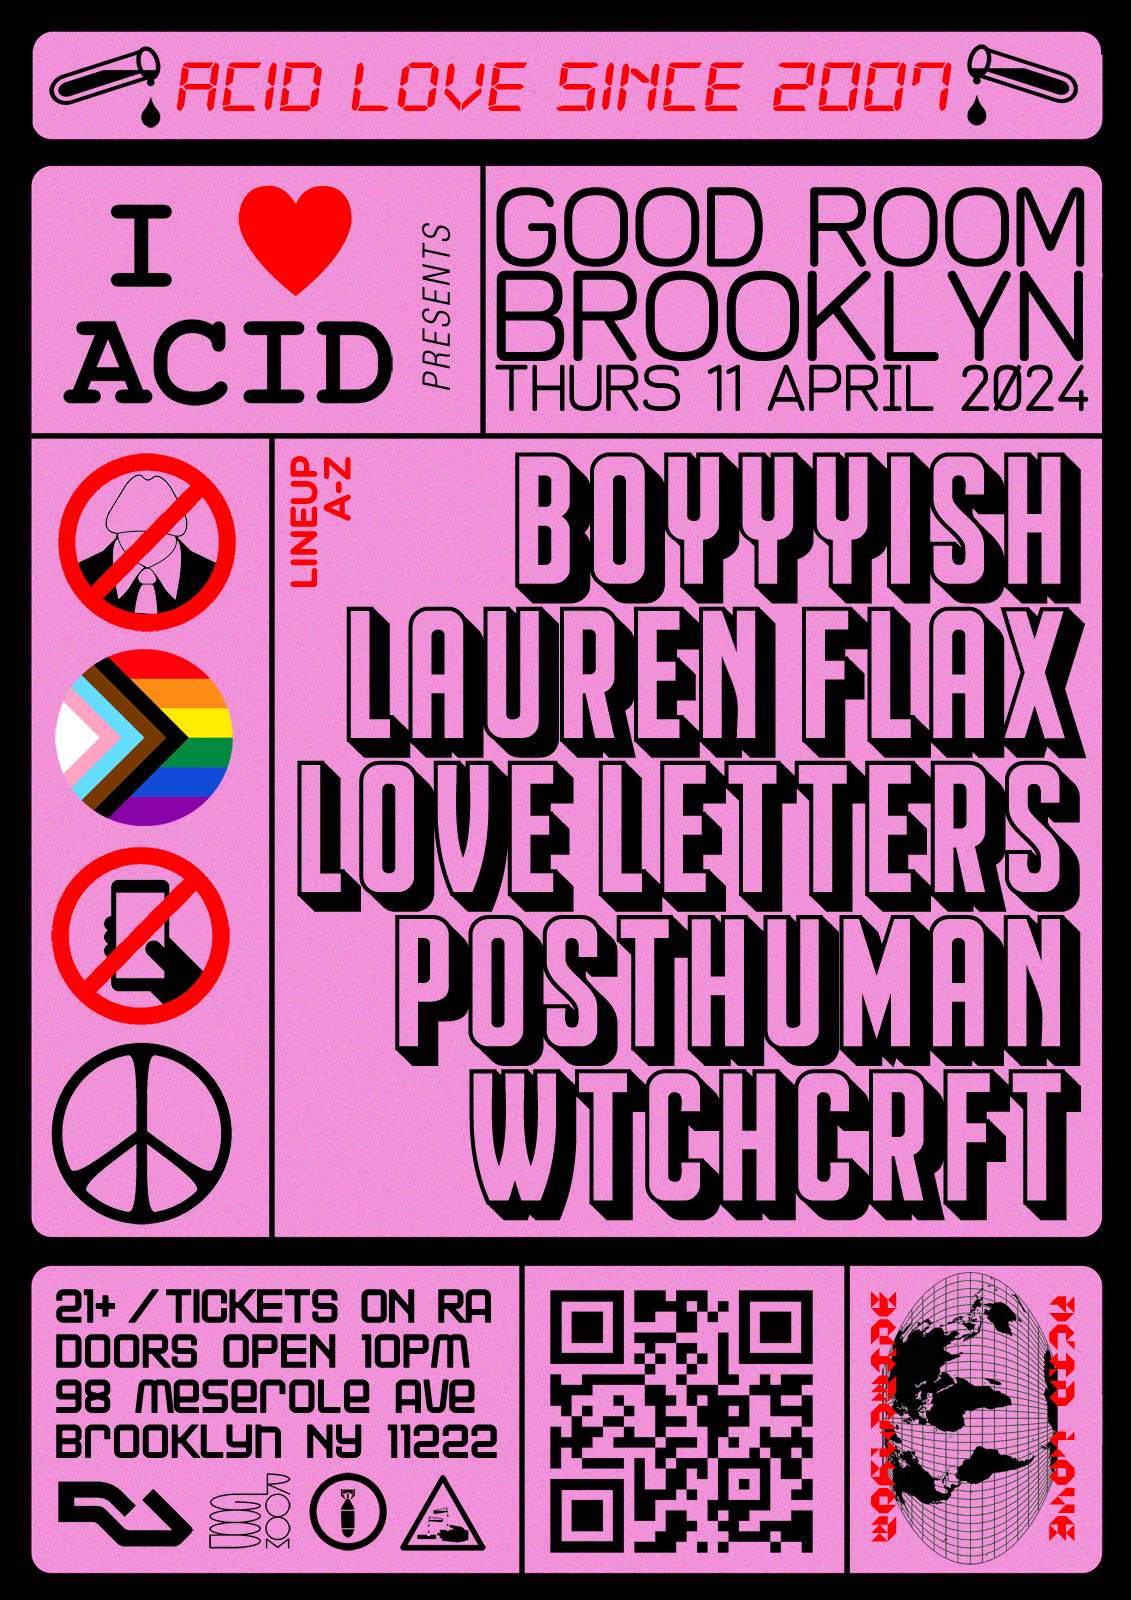 I Love Acid: boyyyish, Lauren Flax, Love Letters, Posthuman, WTCHCRFT - Página frontal